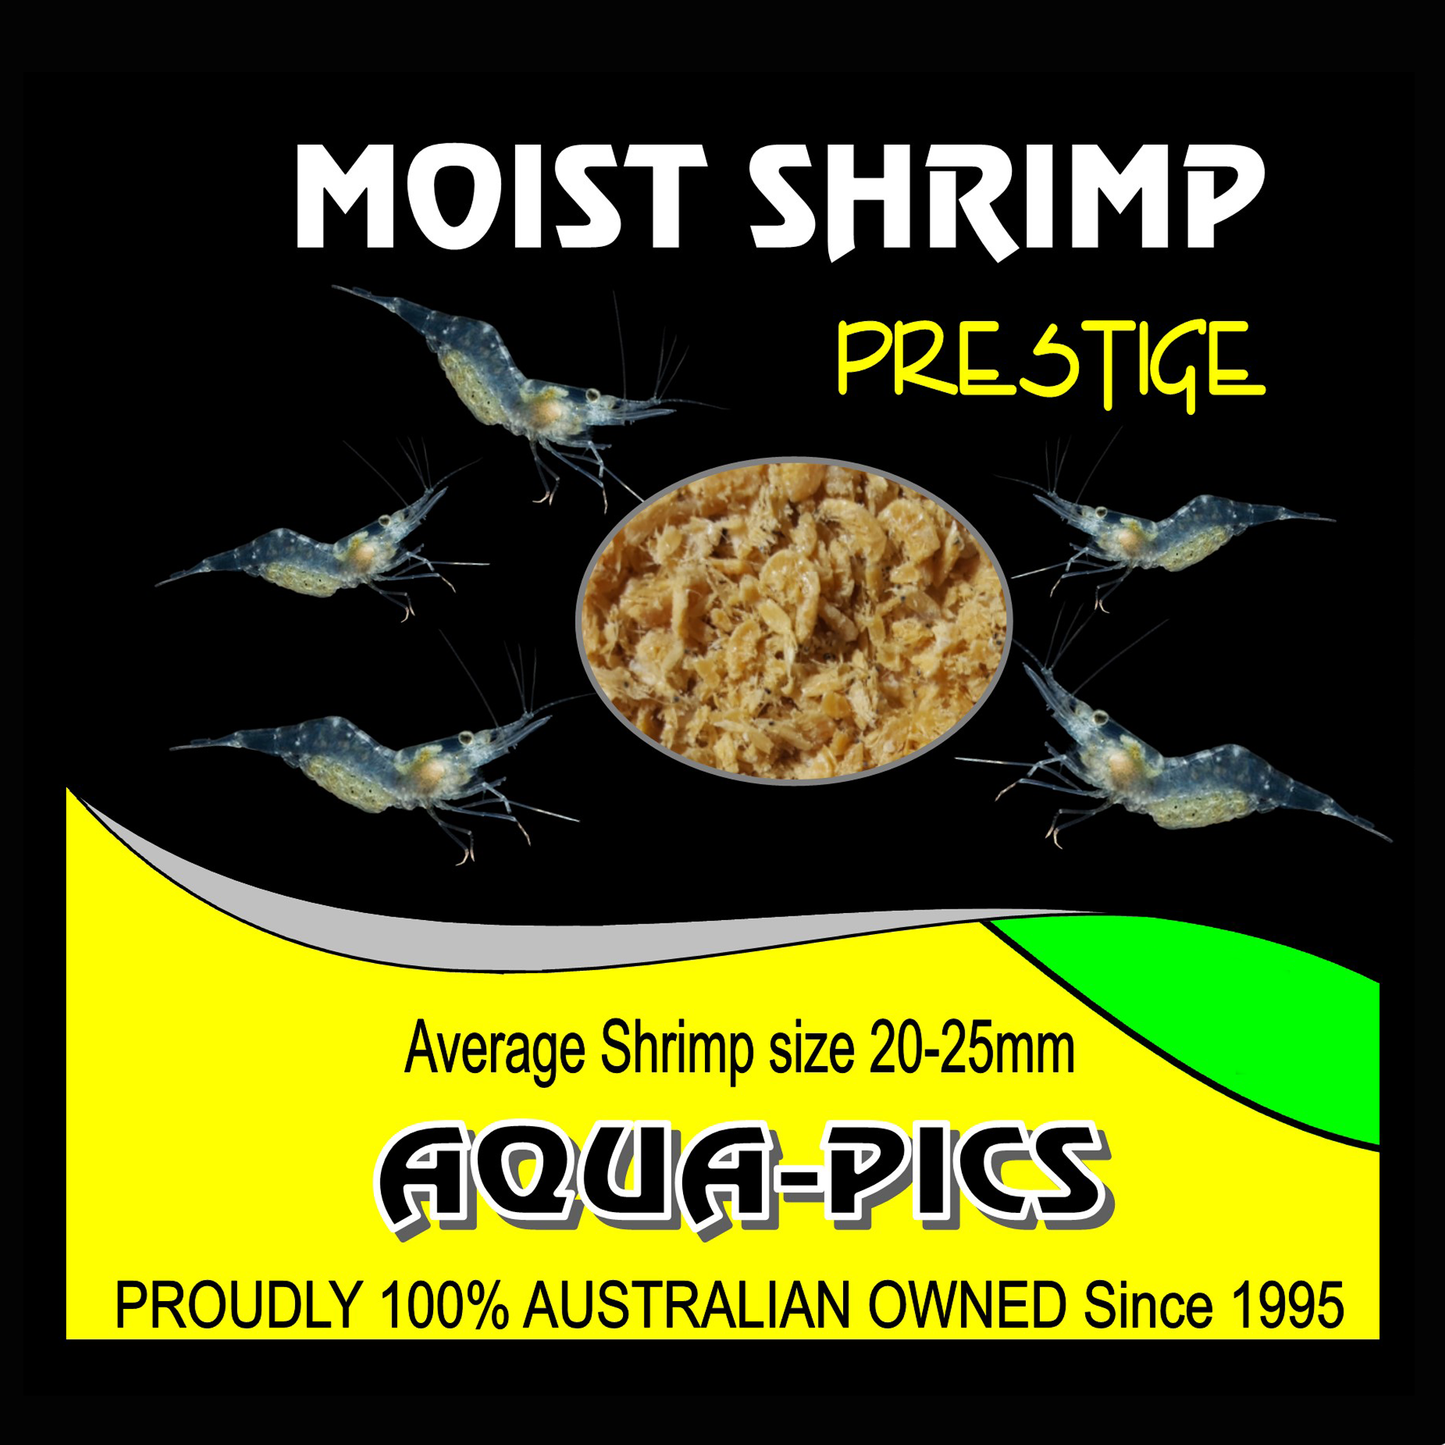 Moist Shrimp 70g High Protein Fish Food